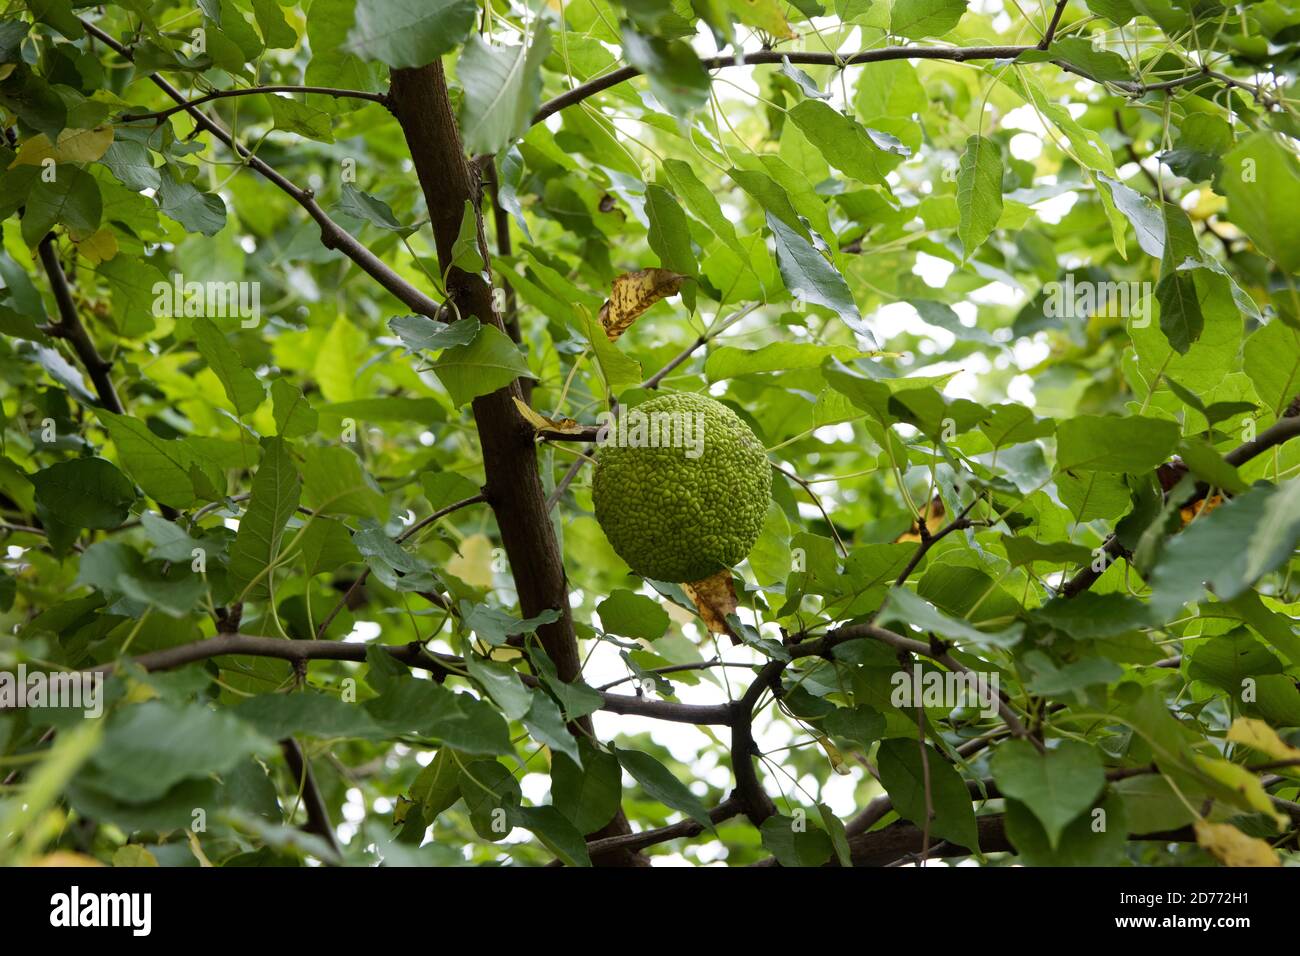 Osage-orange, hedge-apple, Horse-apple, Bodark or Bodock fruit and leaves (Maclura pomifera), Moraceae. Stock Photo